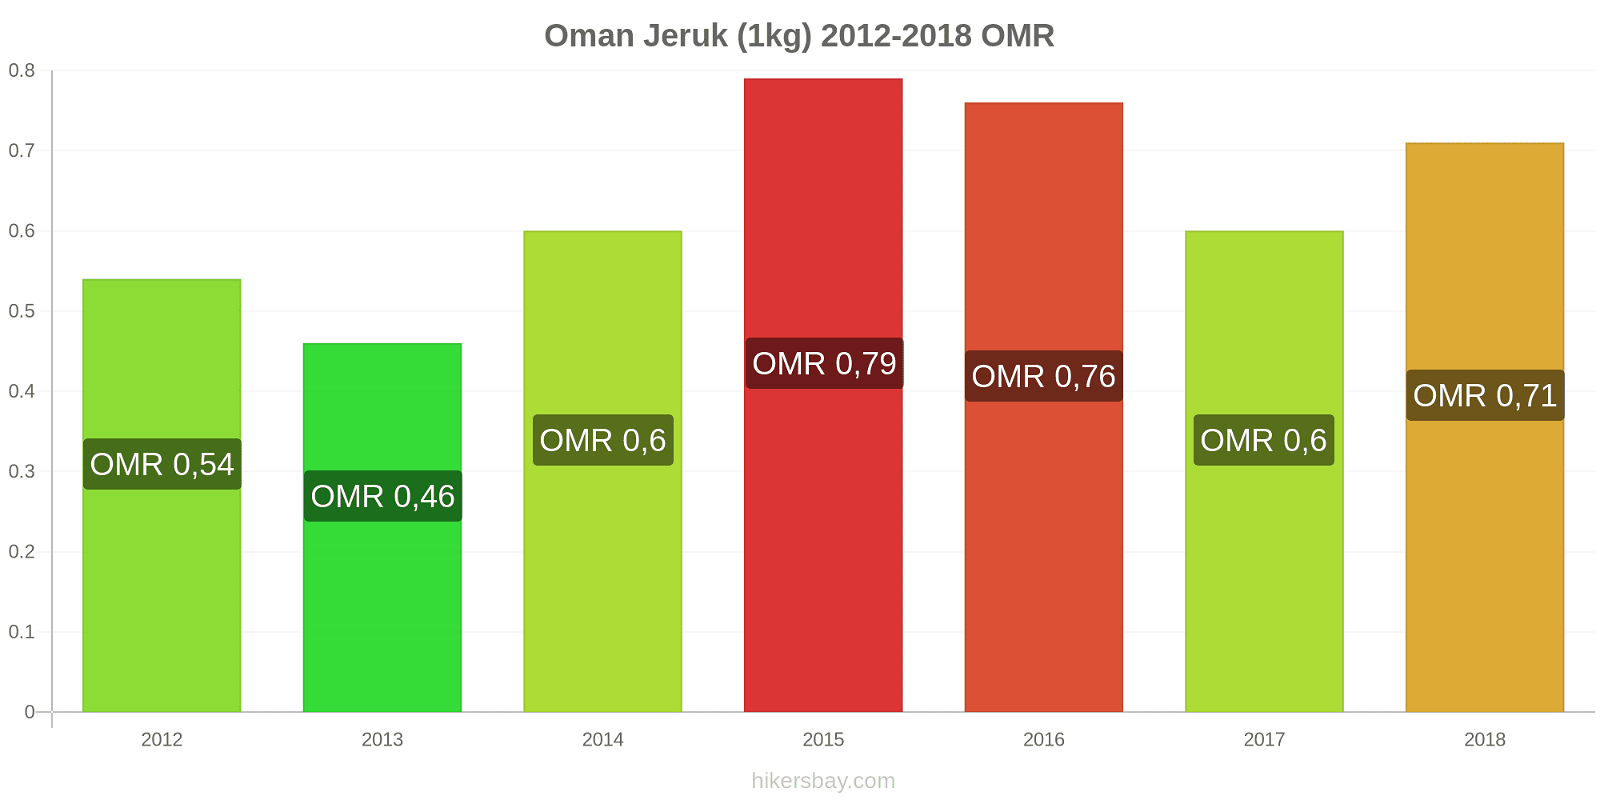 Oman perubahan harga Jeruk (1kg) hikersbay.com